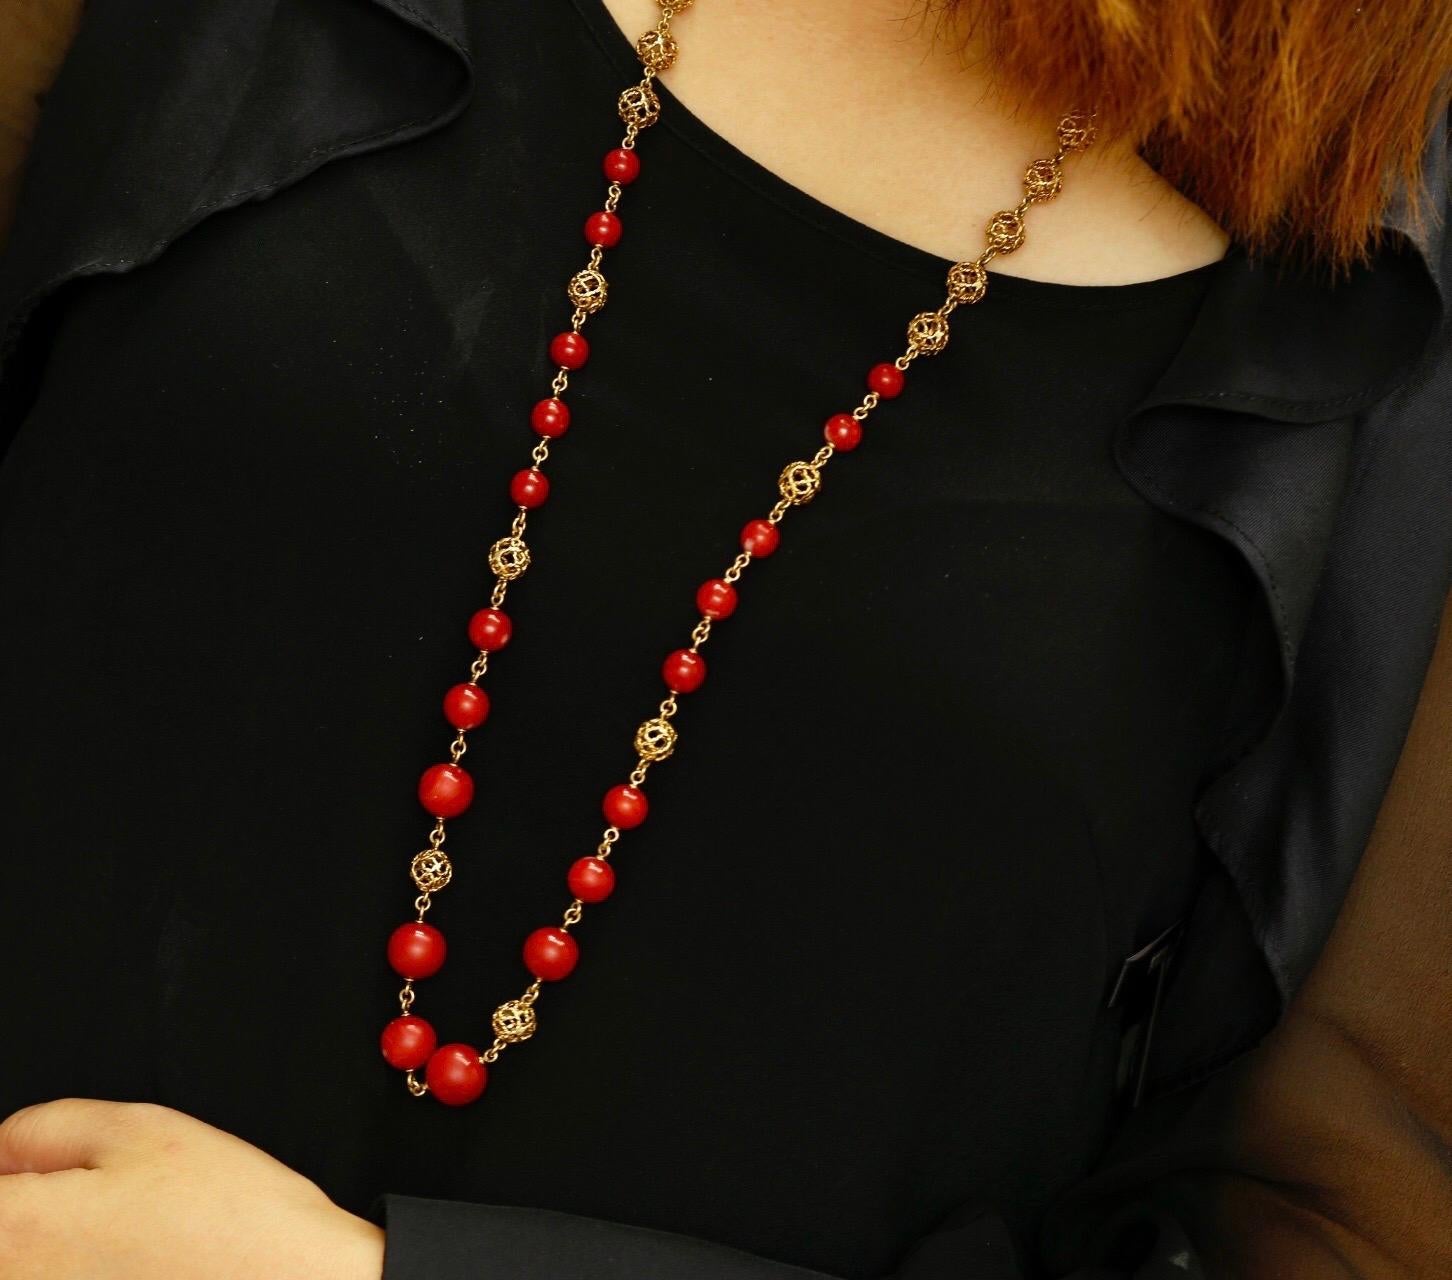 coral stone necklace designs